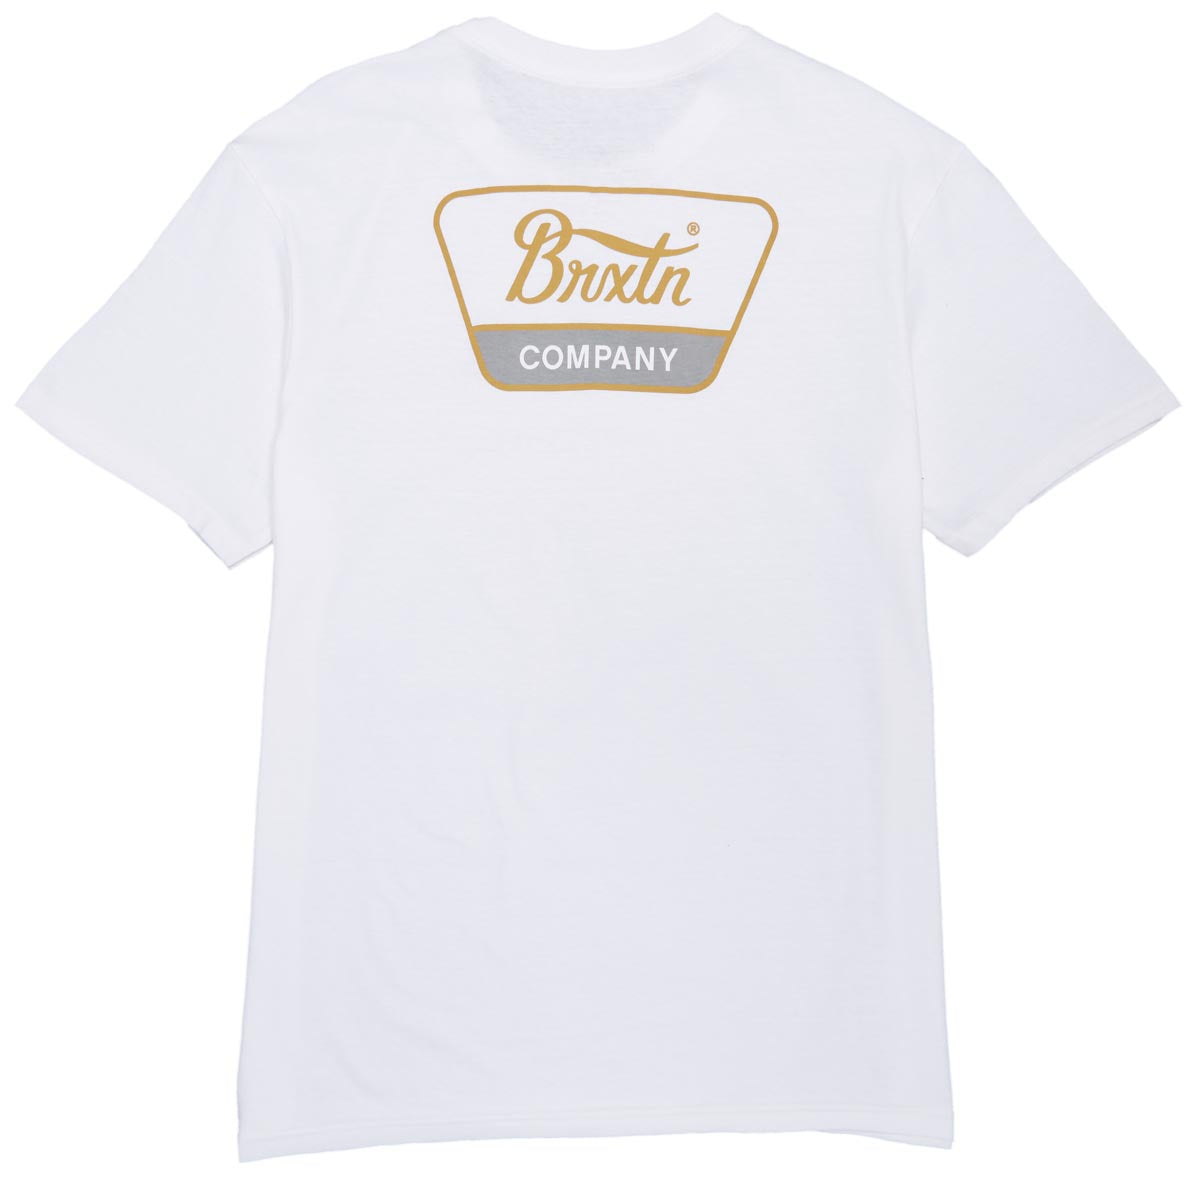 Brixton Linwood T-Shirt - White/Brass/Smoke image 1